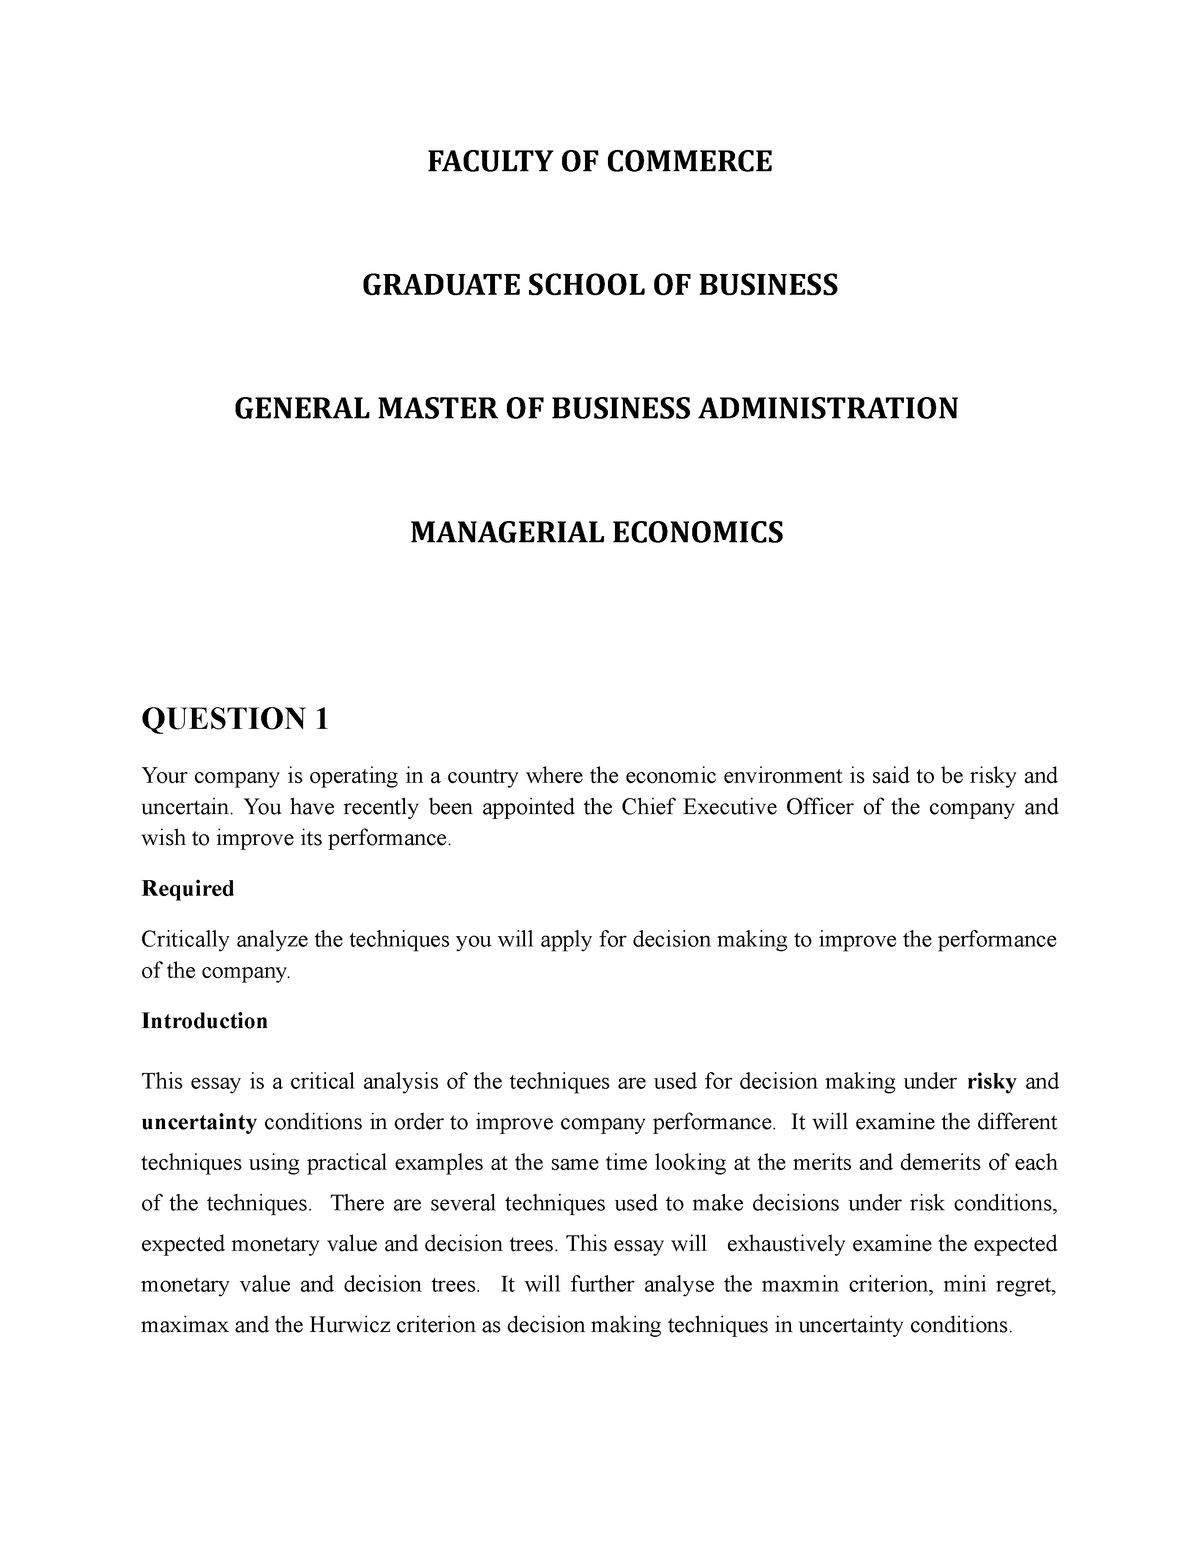 assignment for business economics